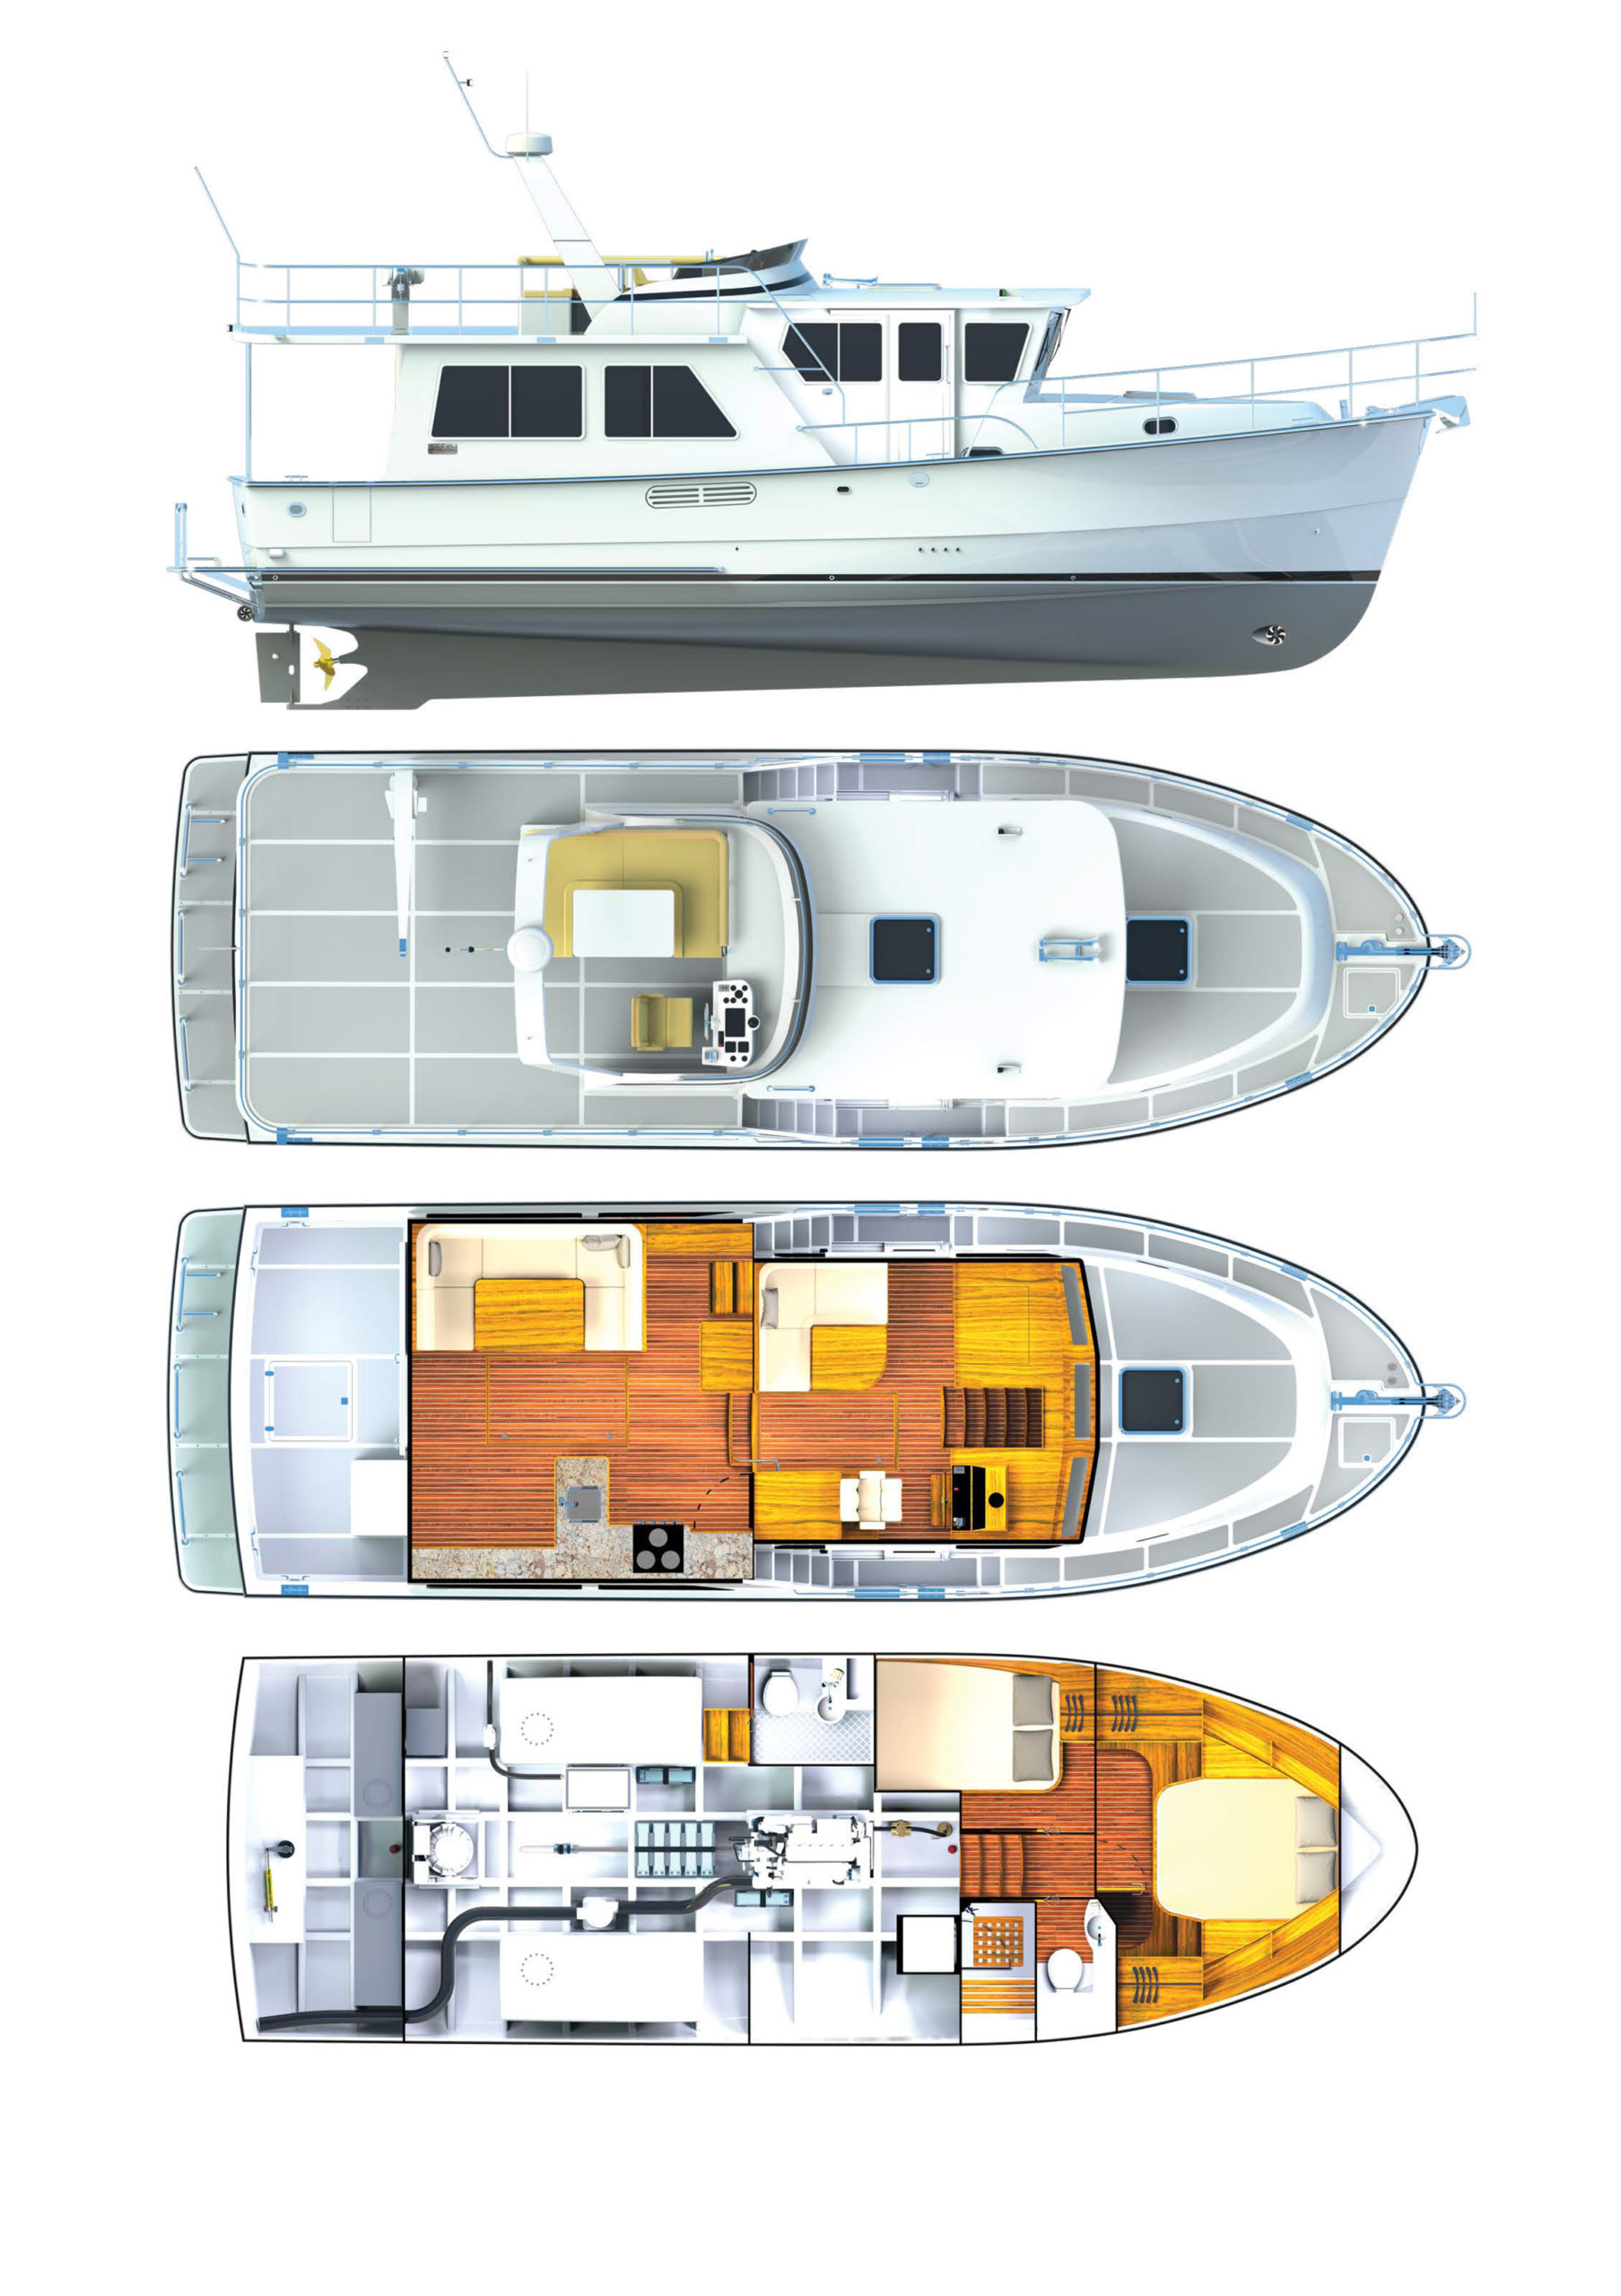 Helmsman Trawlers 43E Pilothouse Profile and Layout drawings